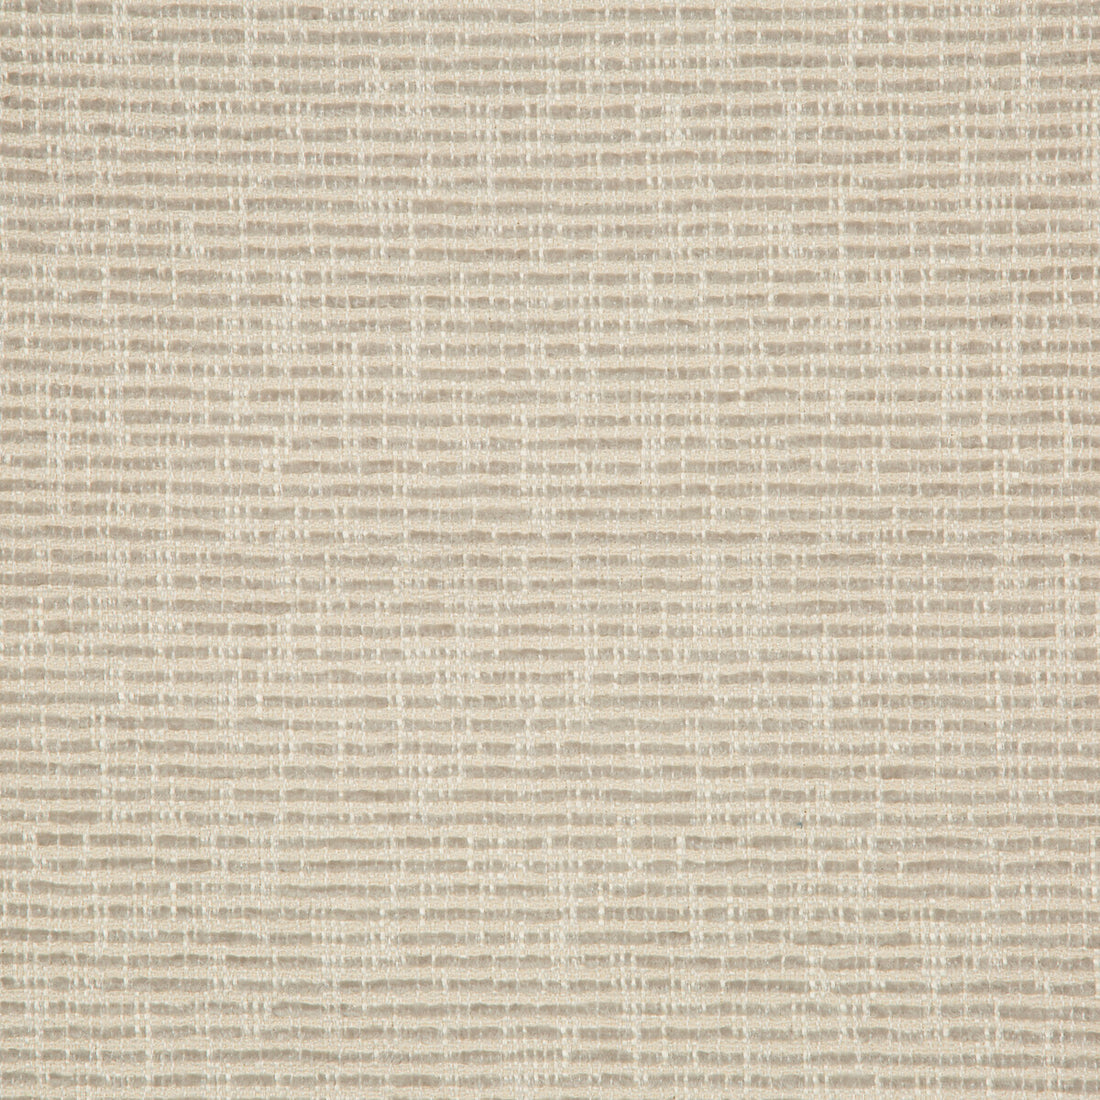 Kravet Smart fabric in 35940-11 color - pattern 35940.11.0 - by Kravet Smart in the Performance Kravetarmor collection